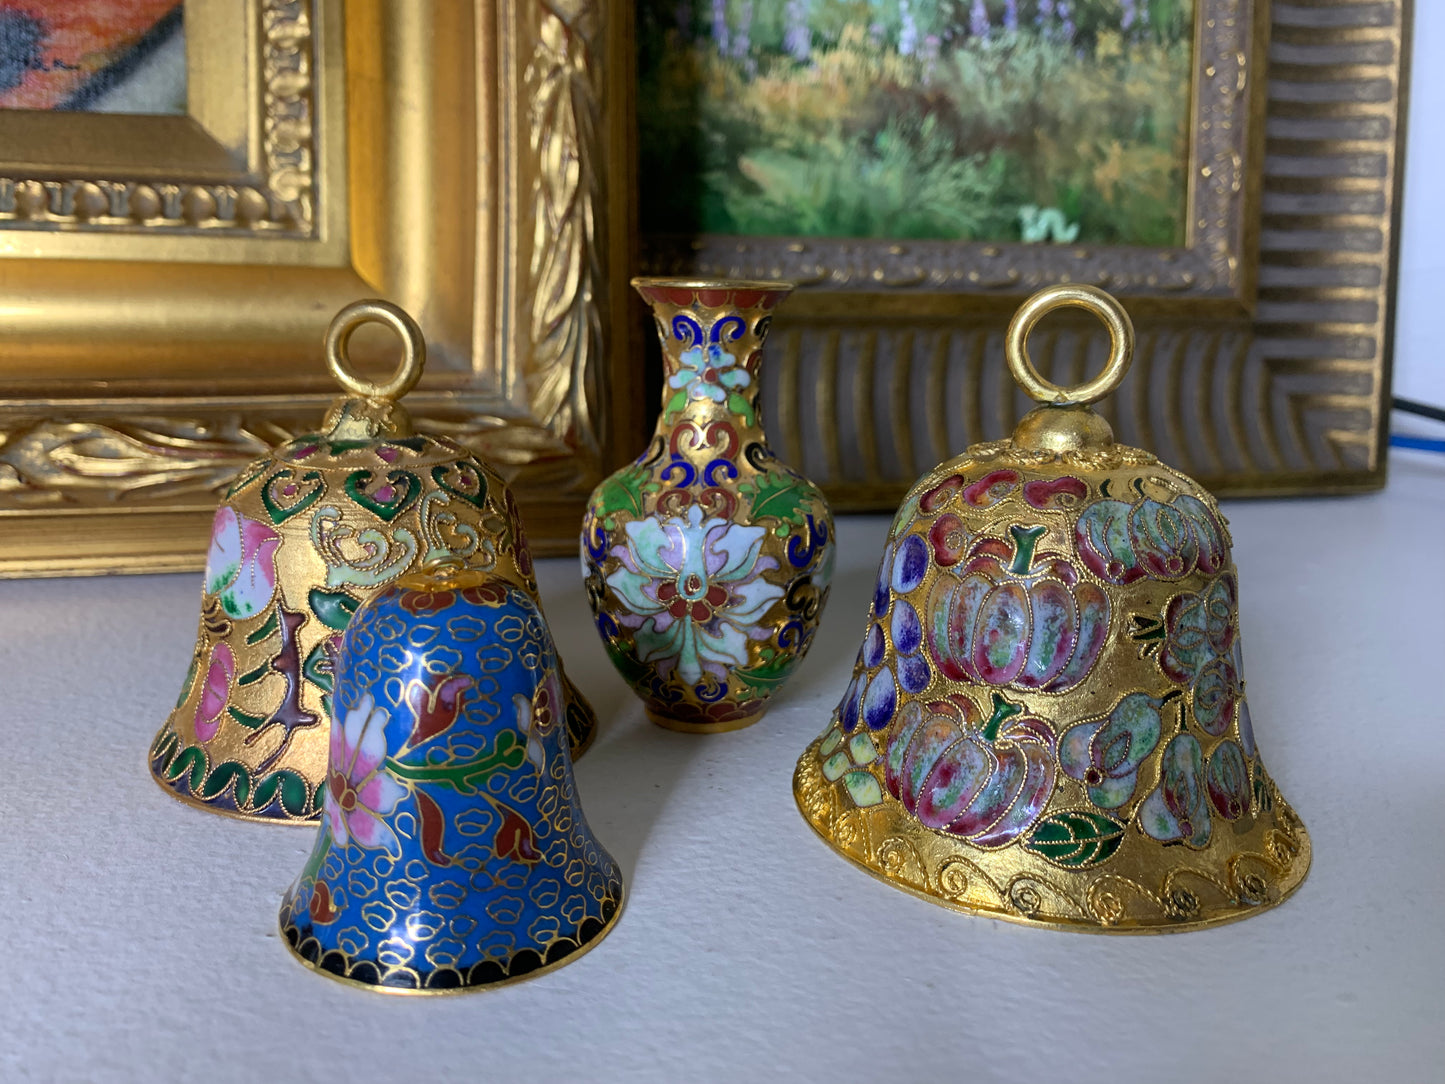 Beautiful cloisonné set including 3 bells and bud vase - Excellent condition!